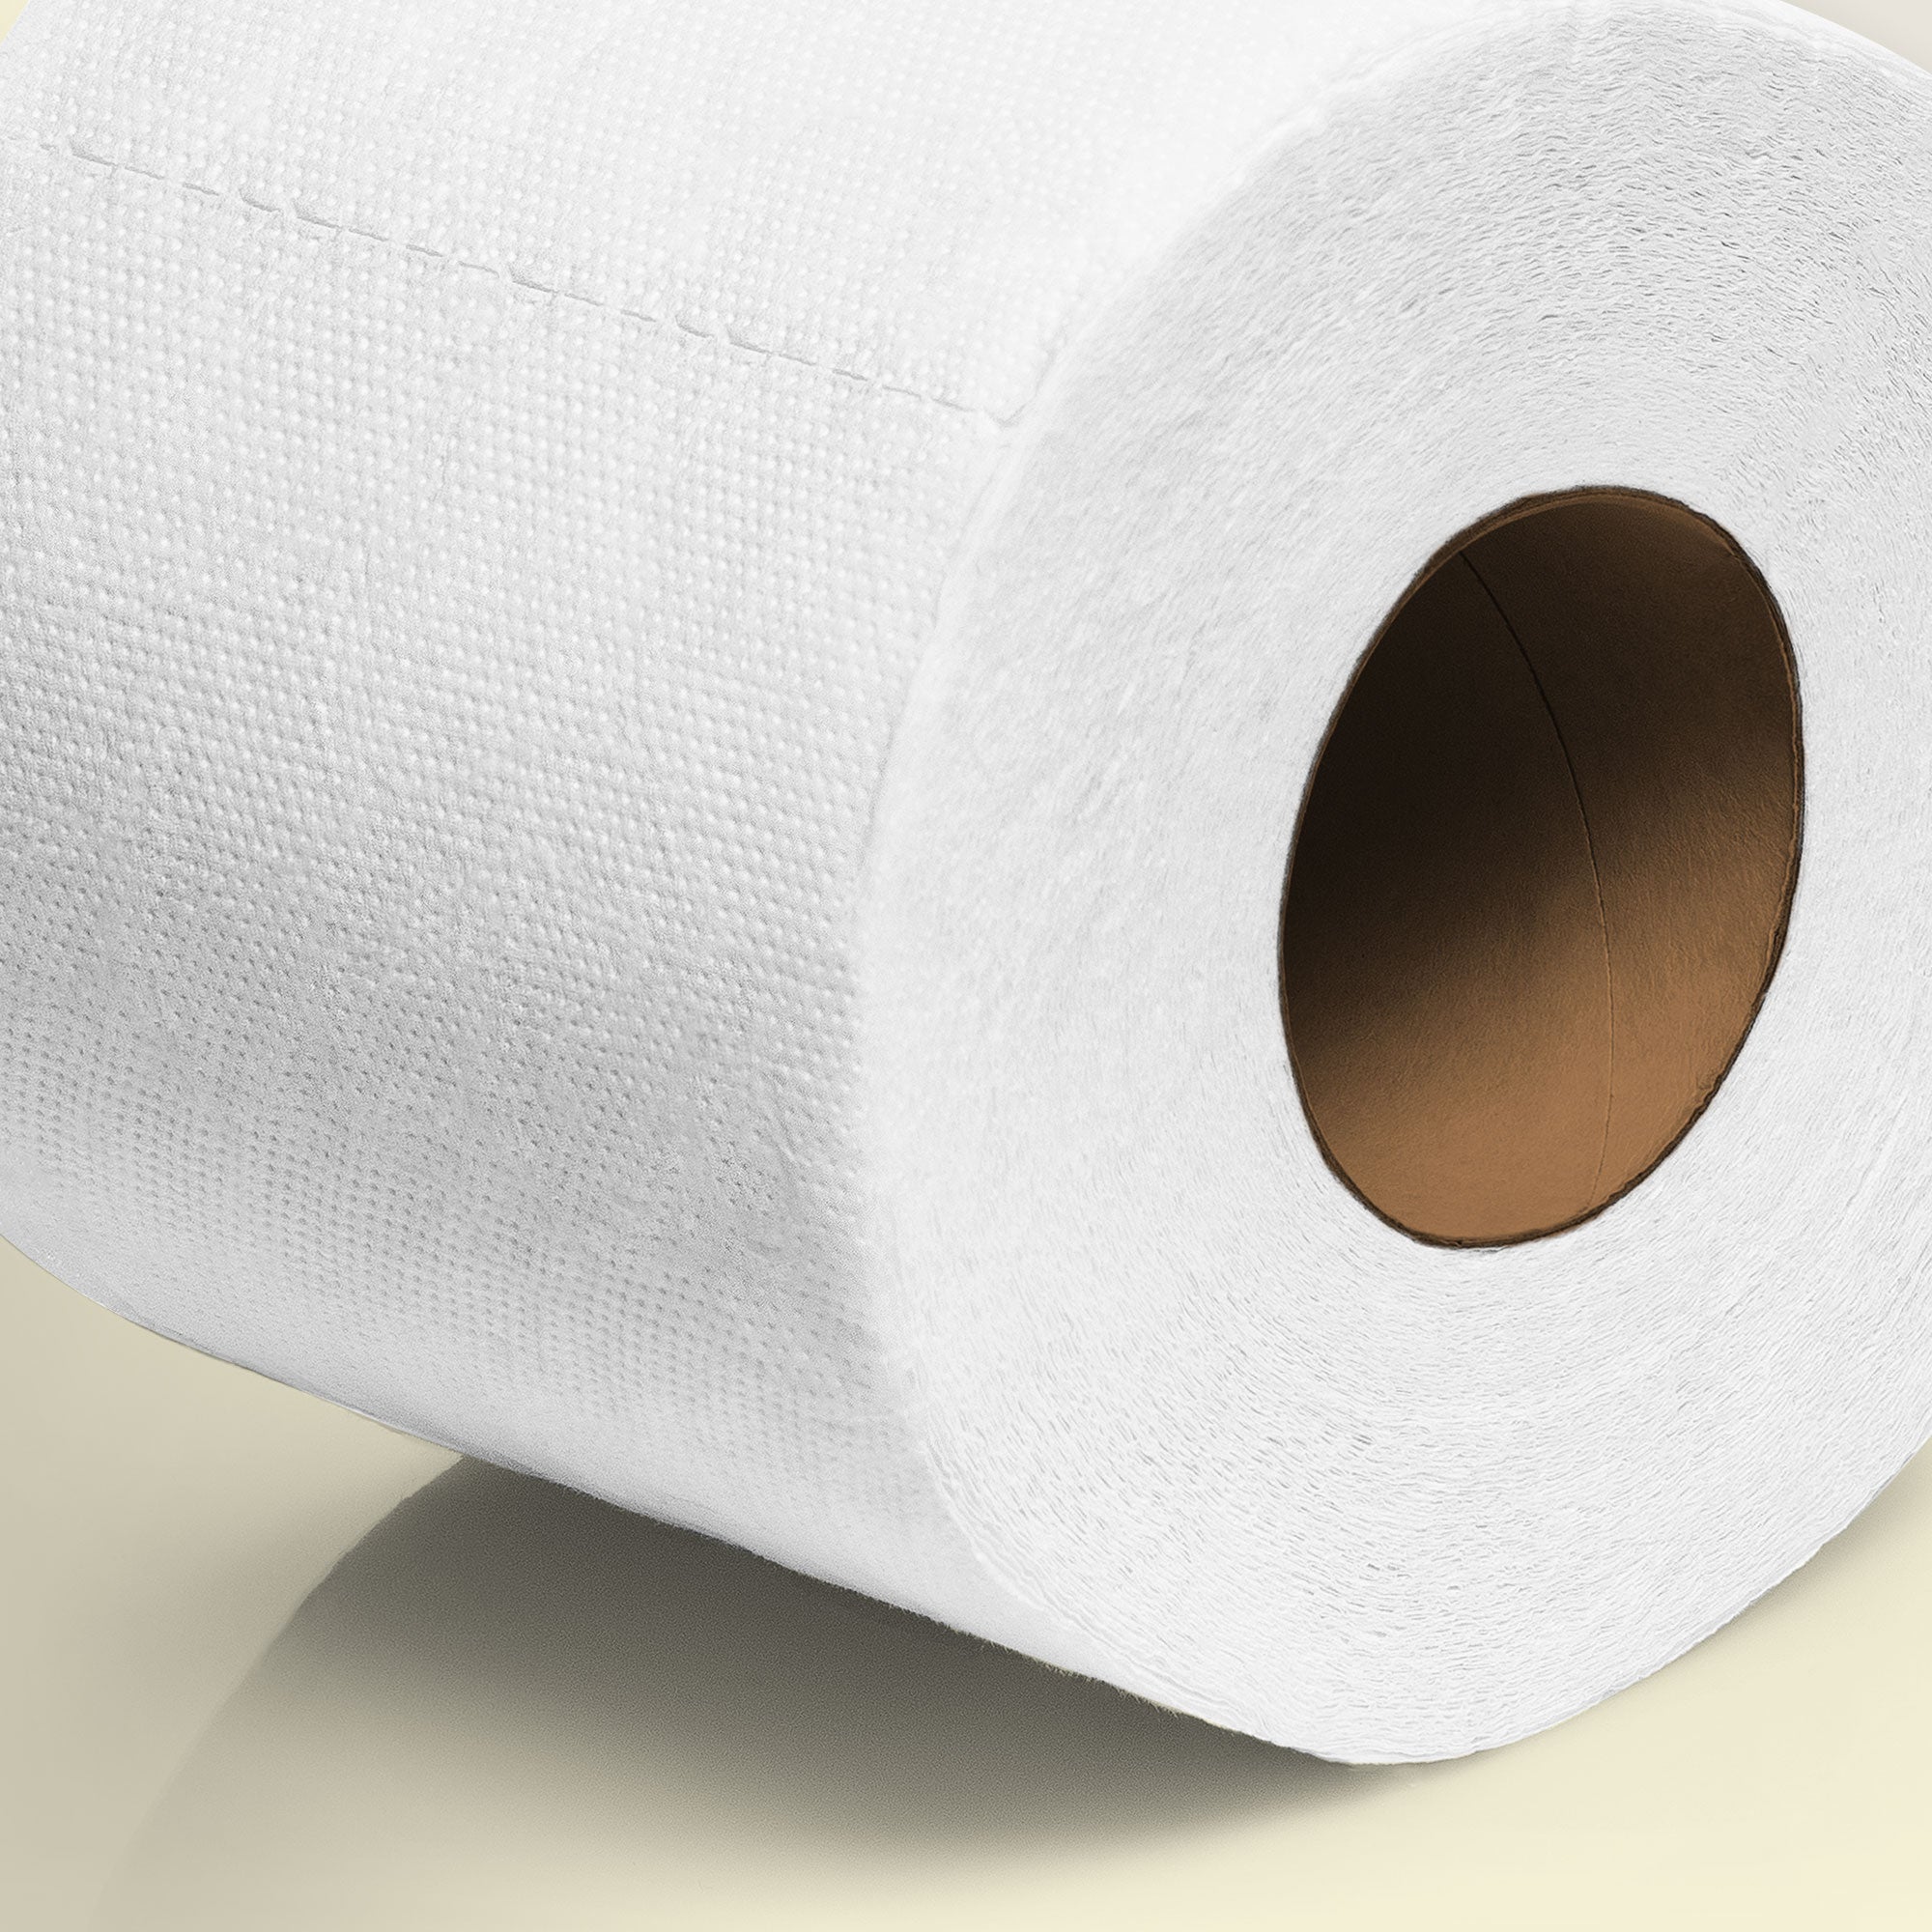 Reel Premium Bamboo Toilet Paper - 12 Rolls of Toilet Paper - 3